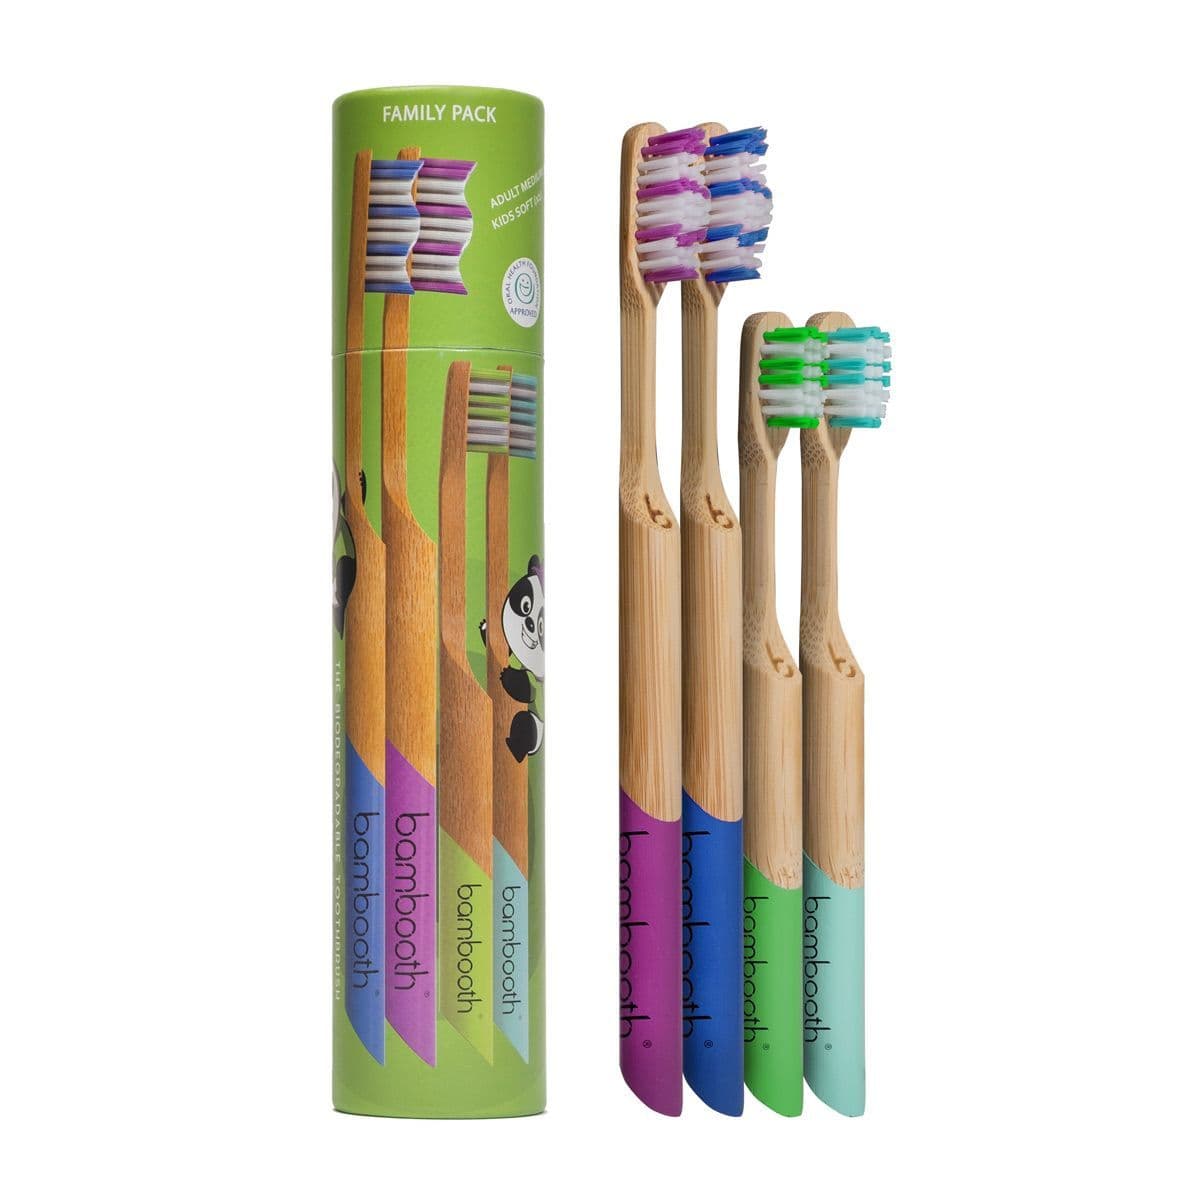 Bambooth Medium Toothbrush - Family Pack